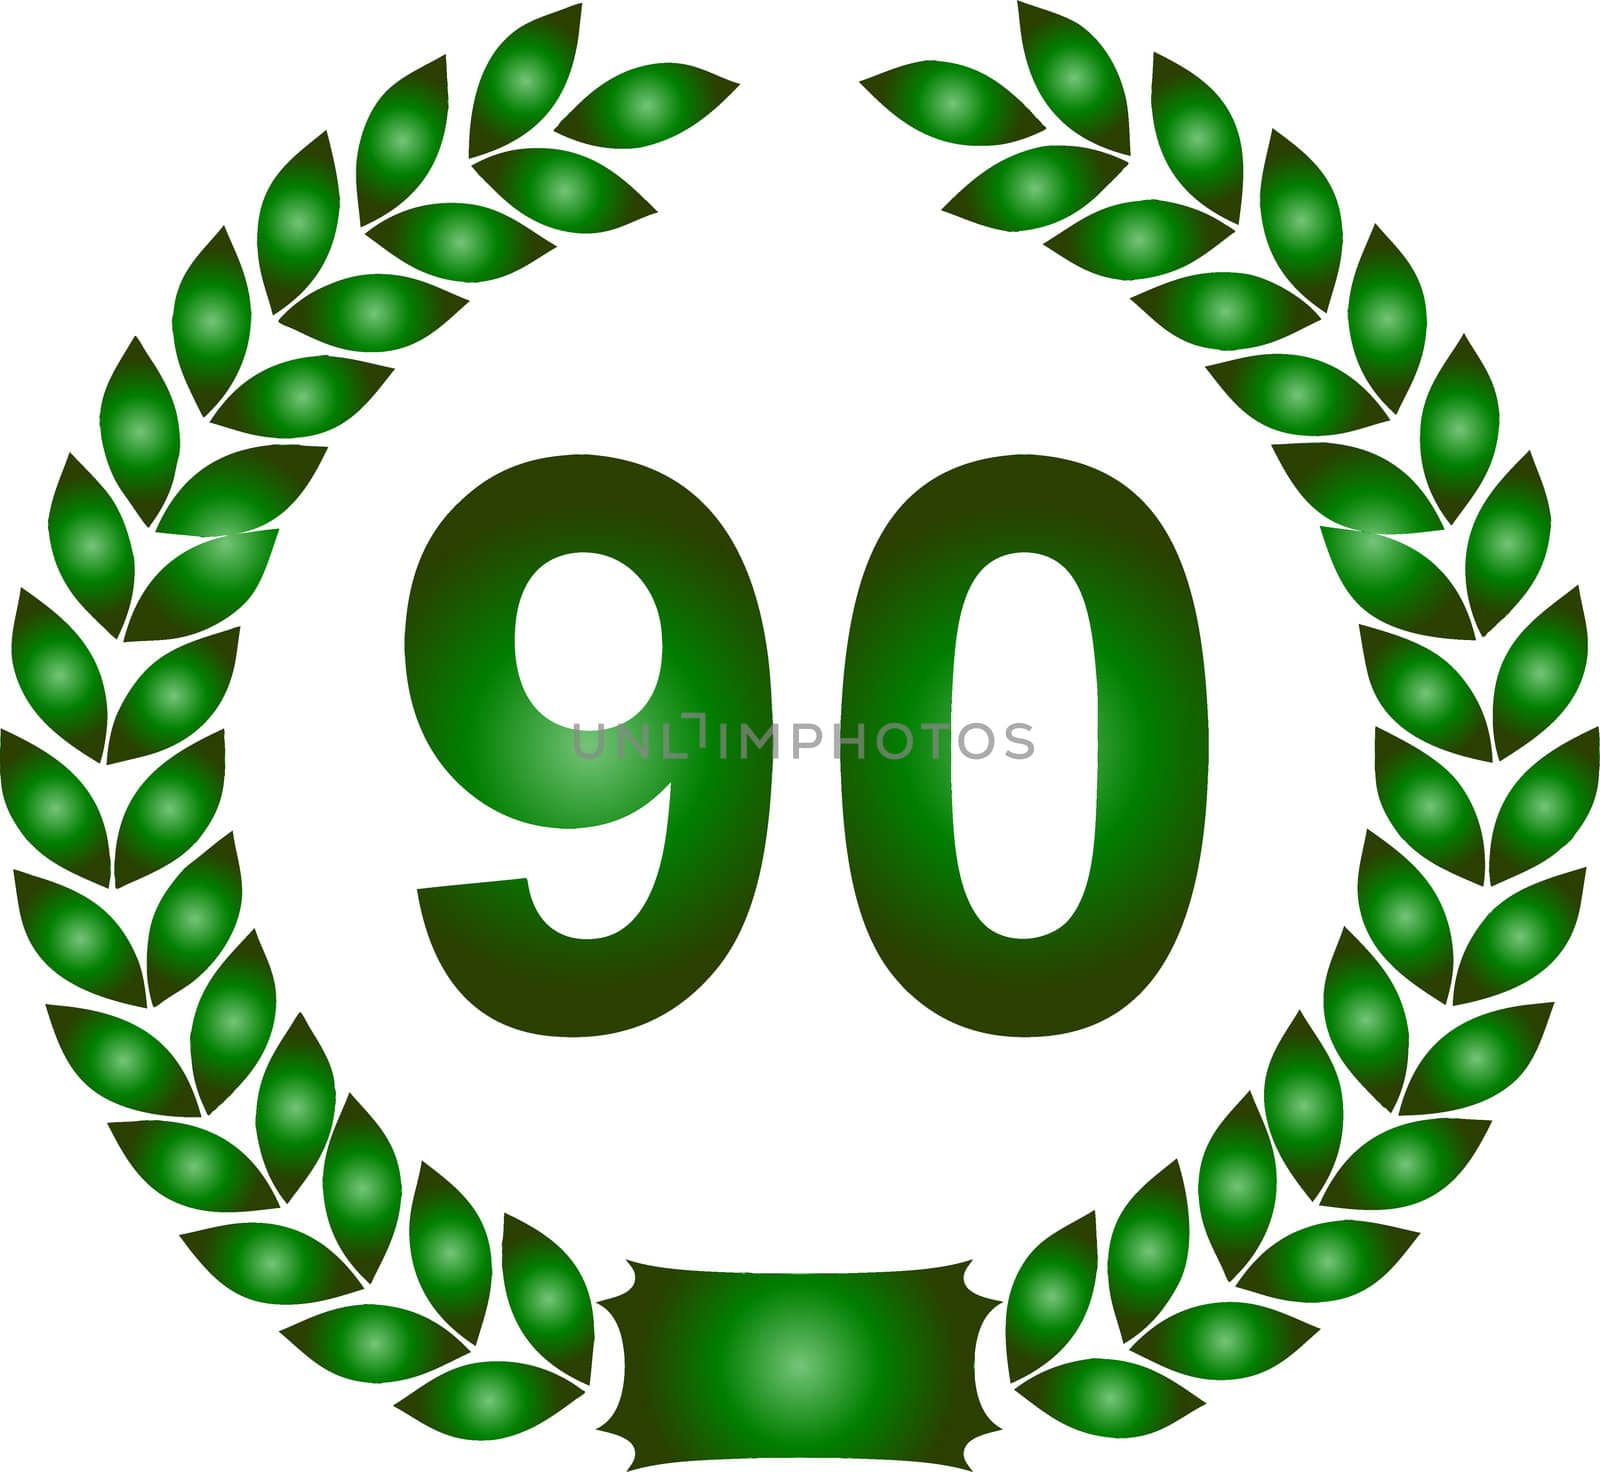 green laurel wreath 90 years by peromarketing